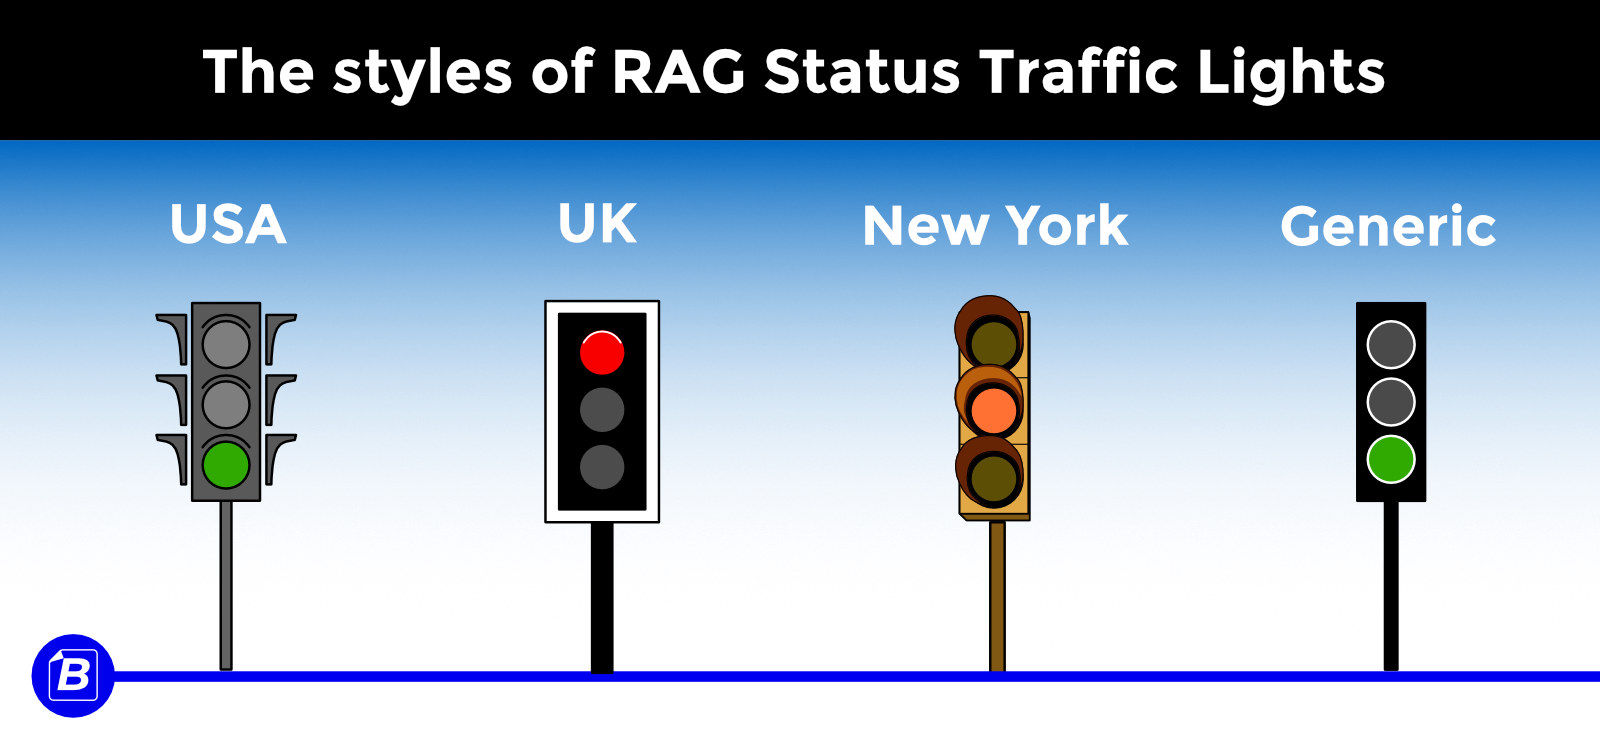 The styles of RAG Status traffic lights